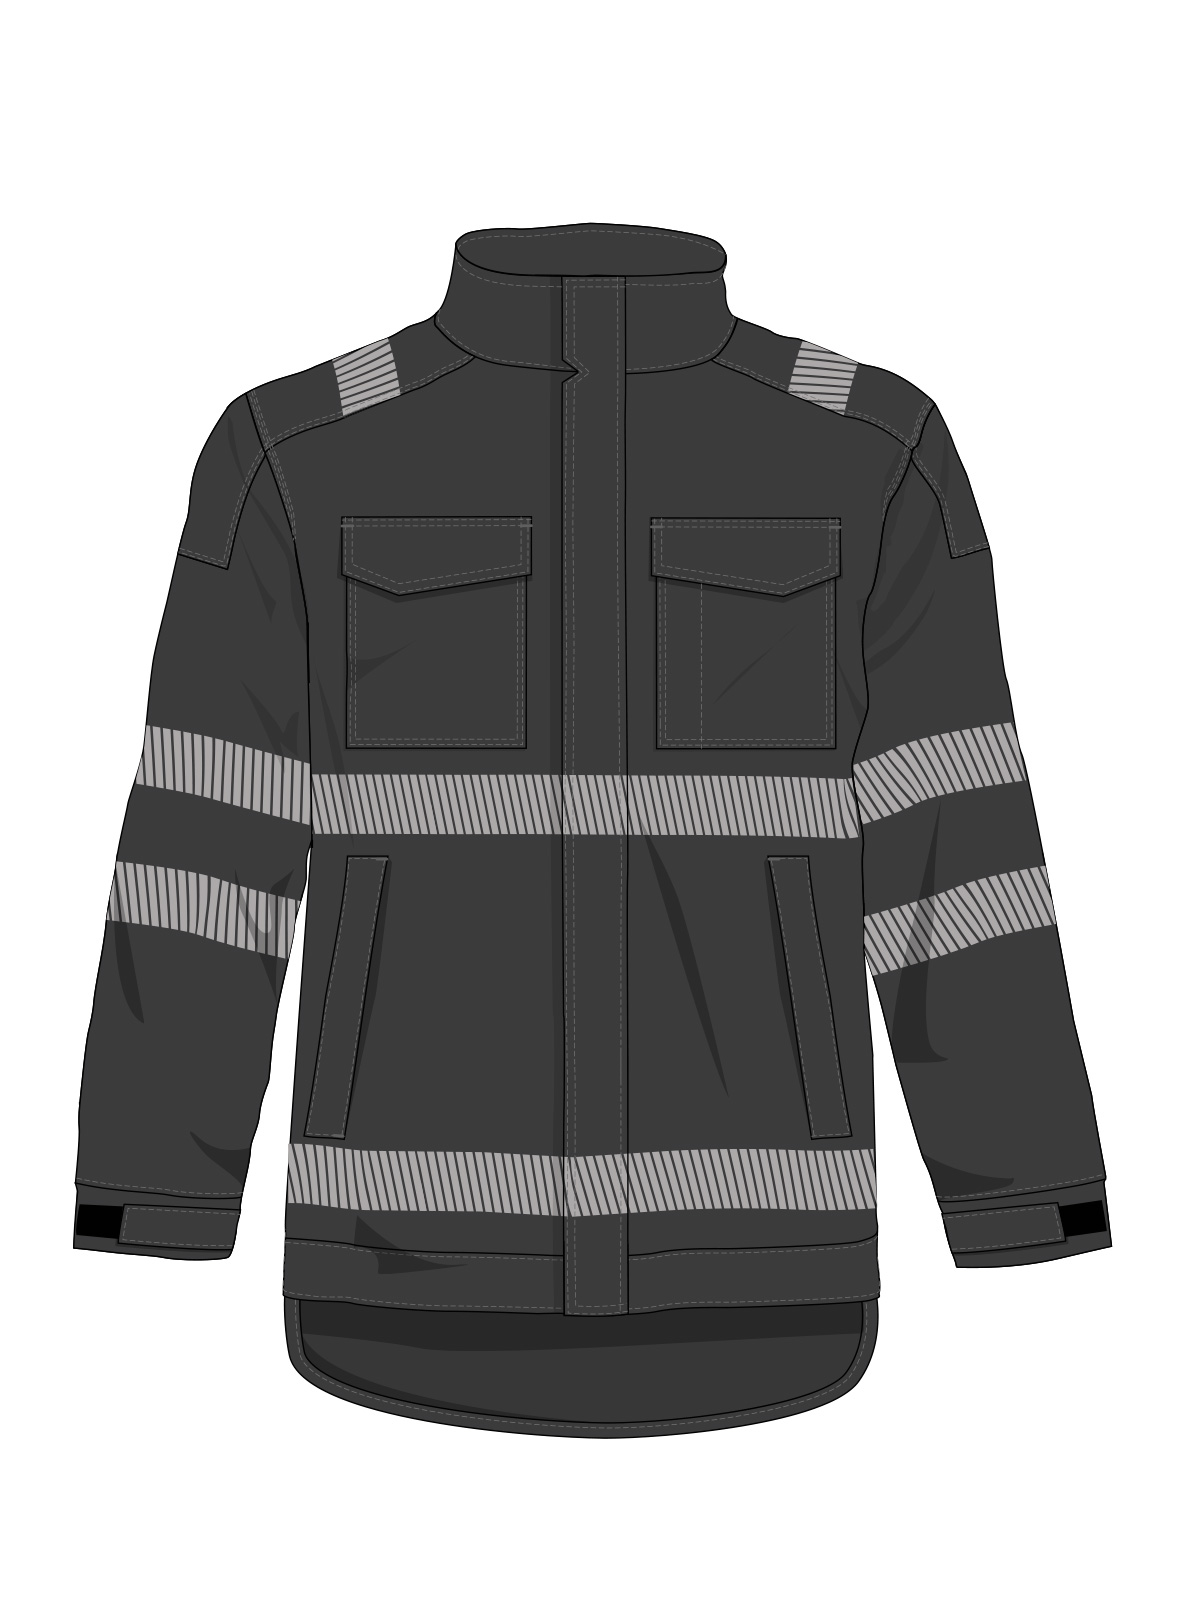 ArcLite Flame Retardant Jacket